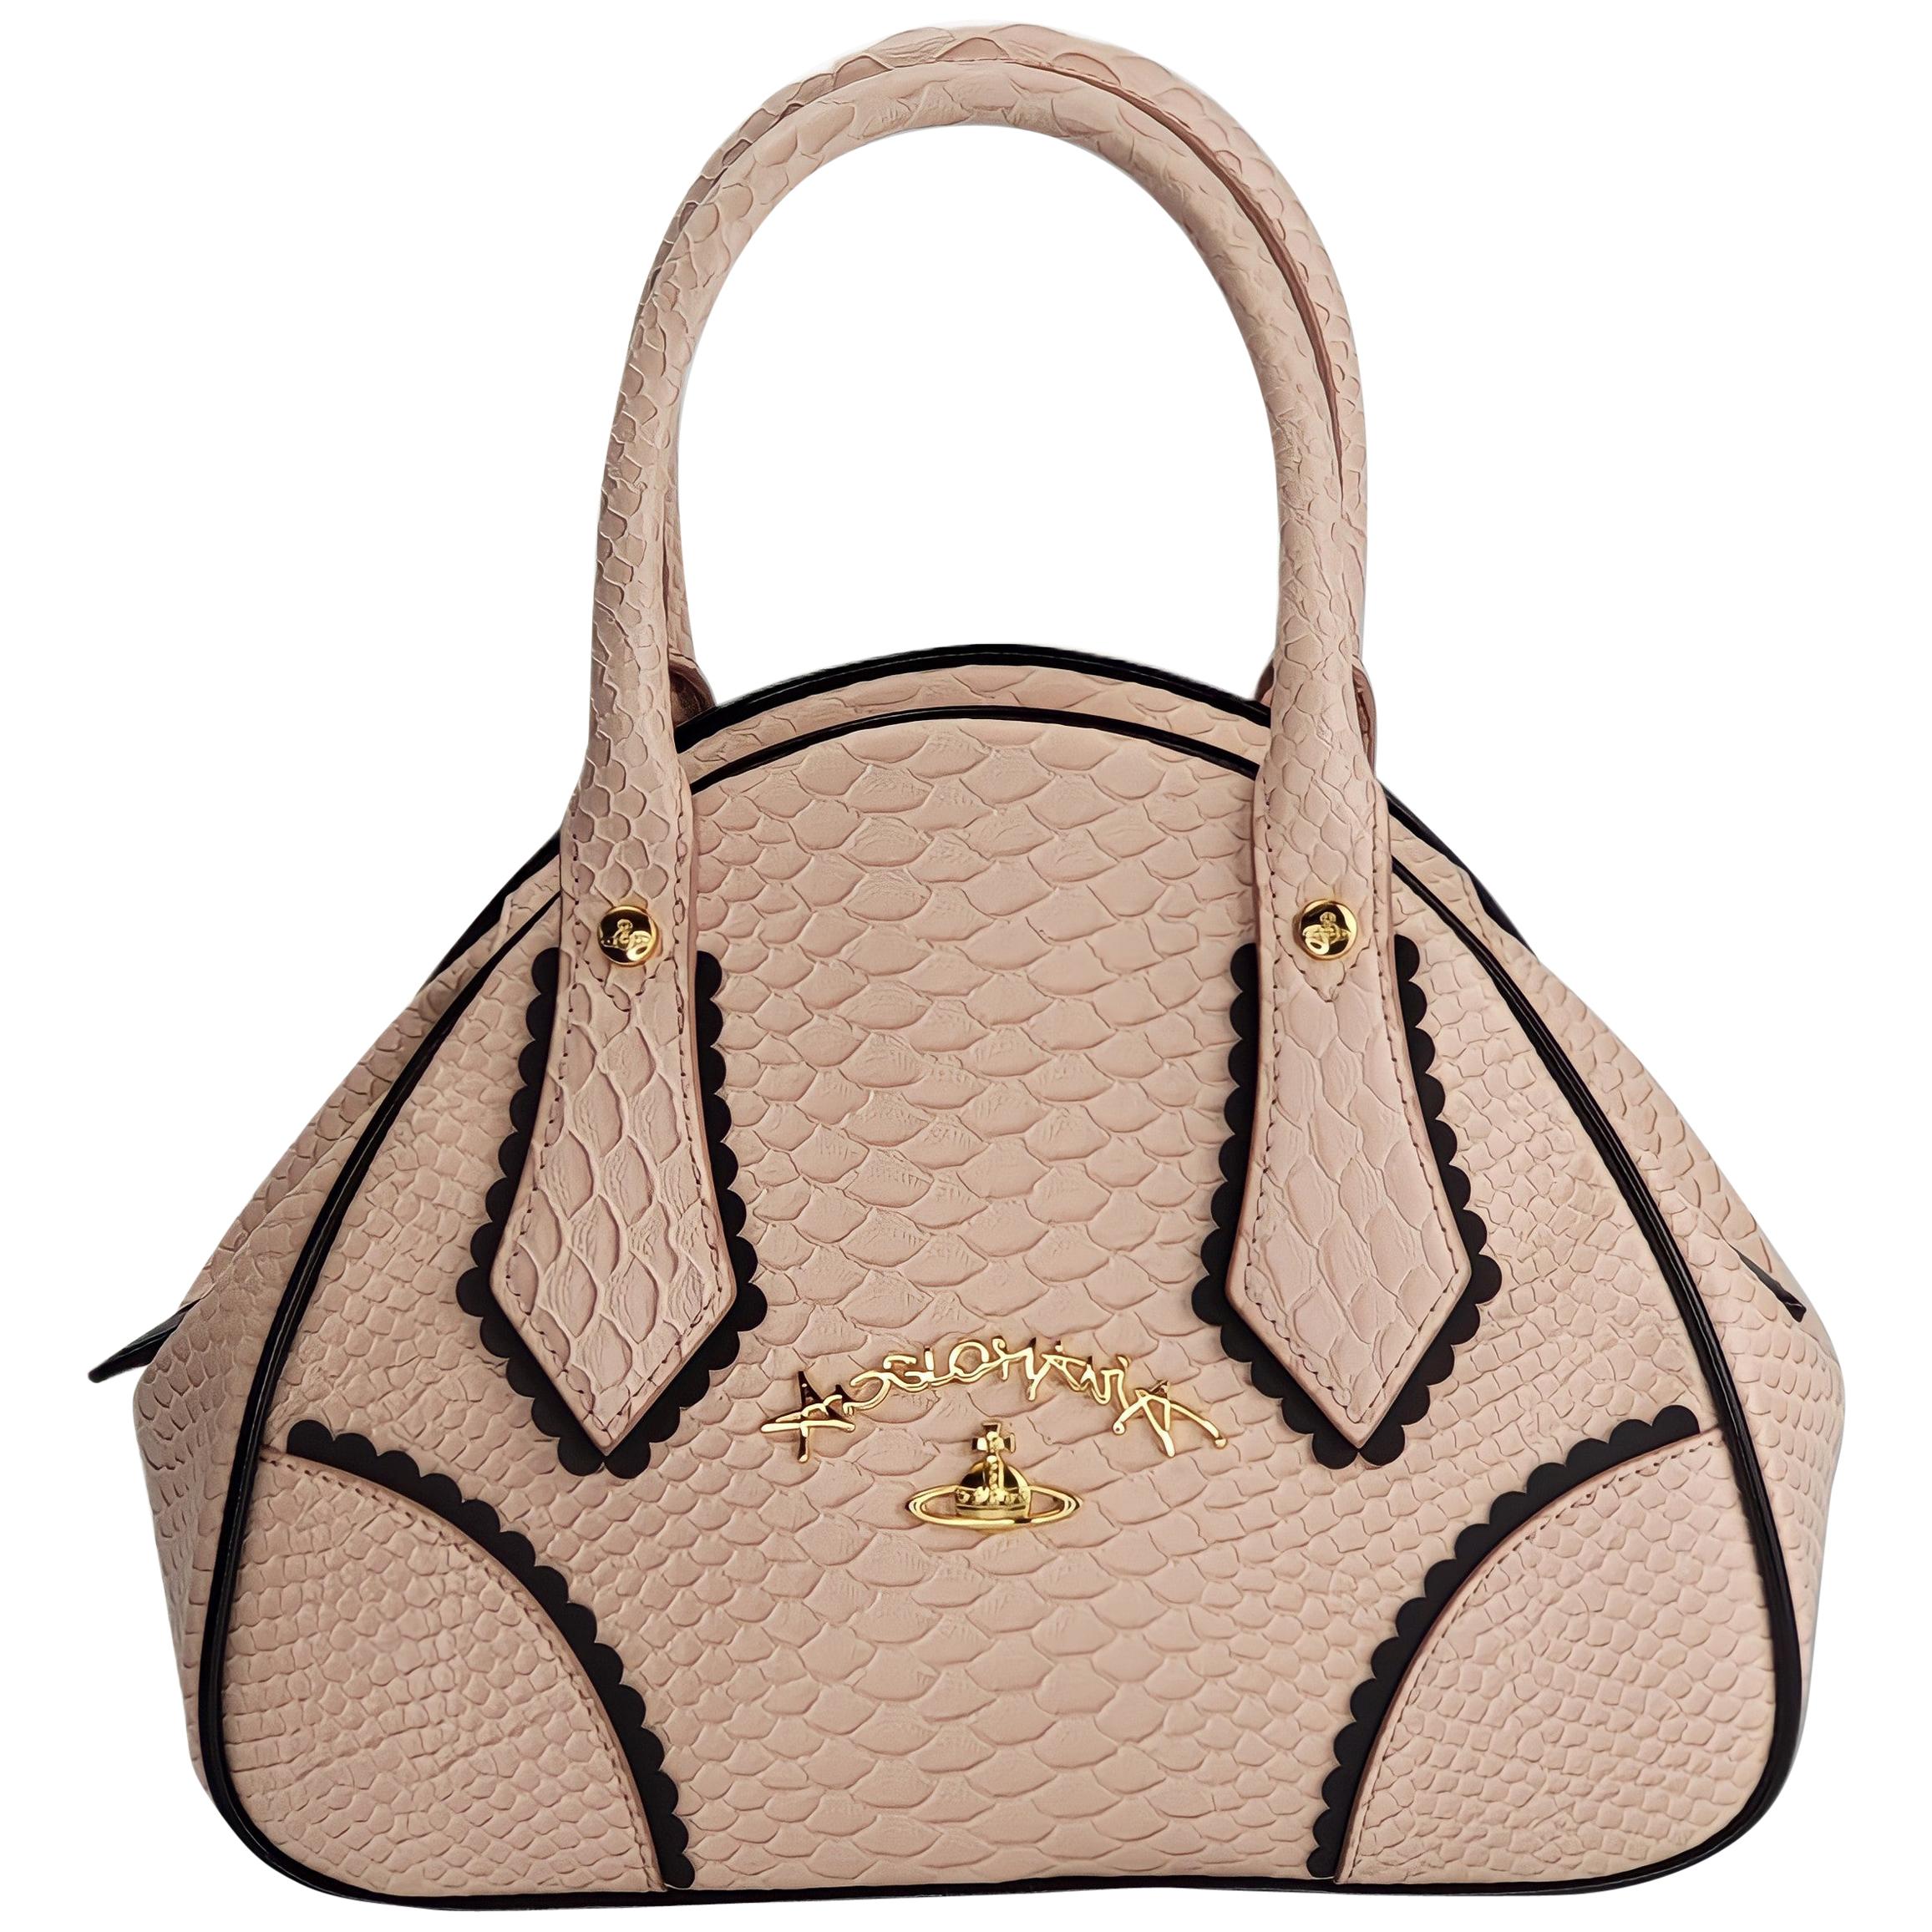 Vivienne Westwood Anglomania 2020 Frilly Snake Heart Bag w/ Tags - Pink  Handle Bags, Handbags - VWA23399